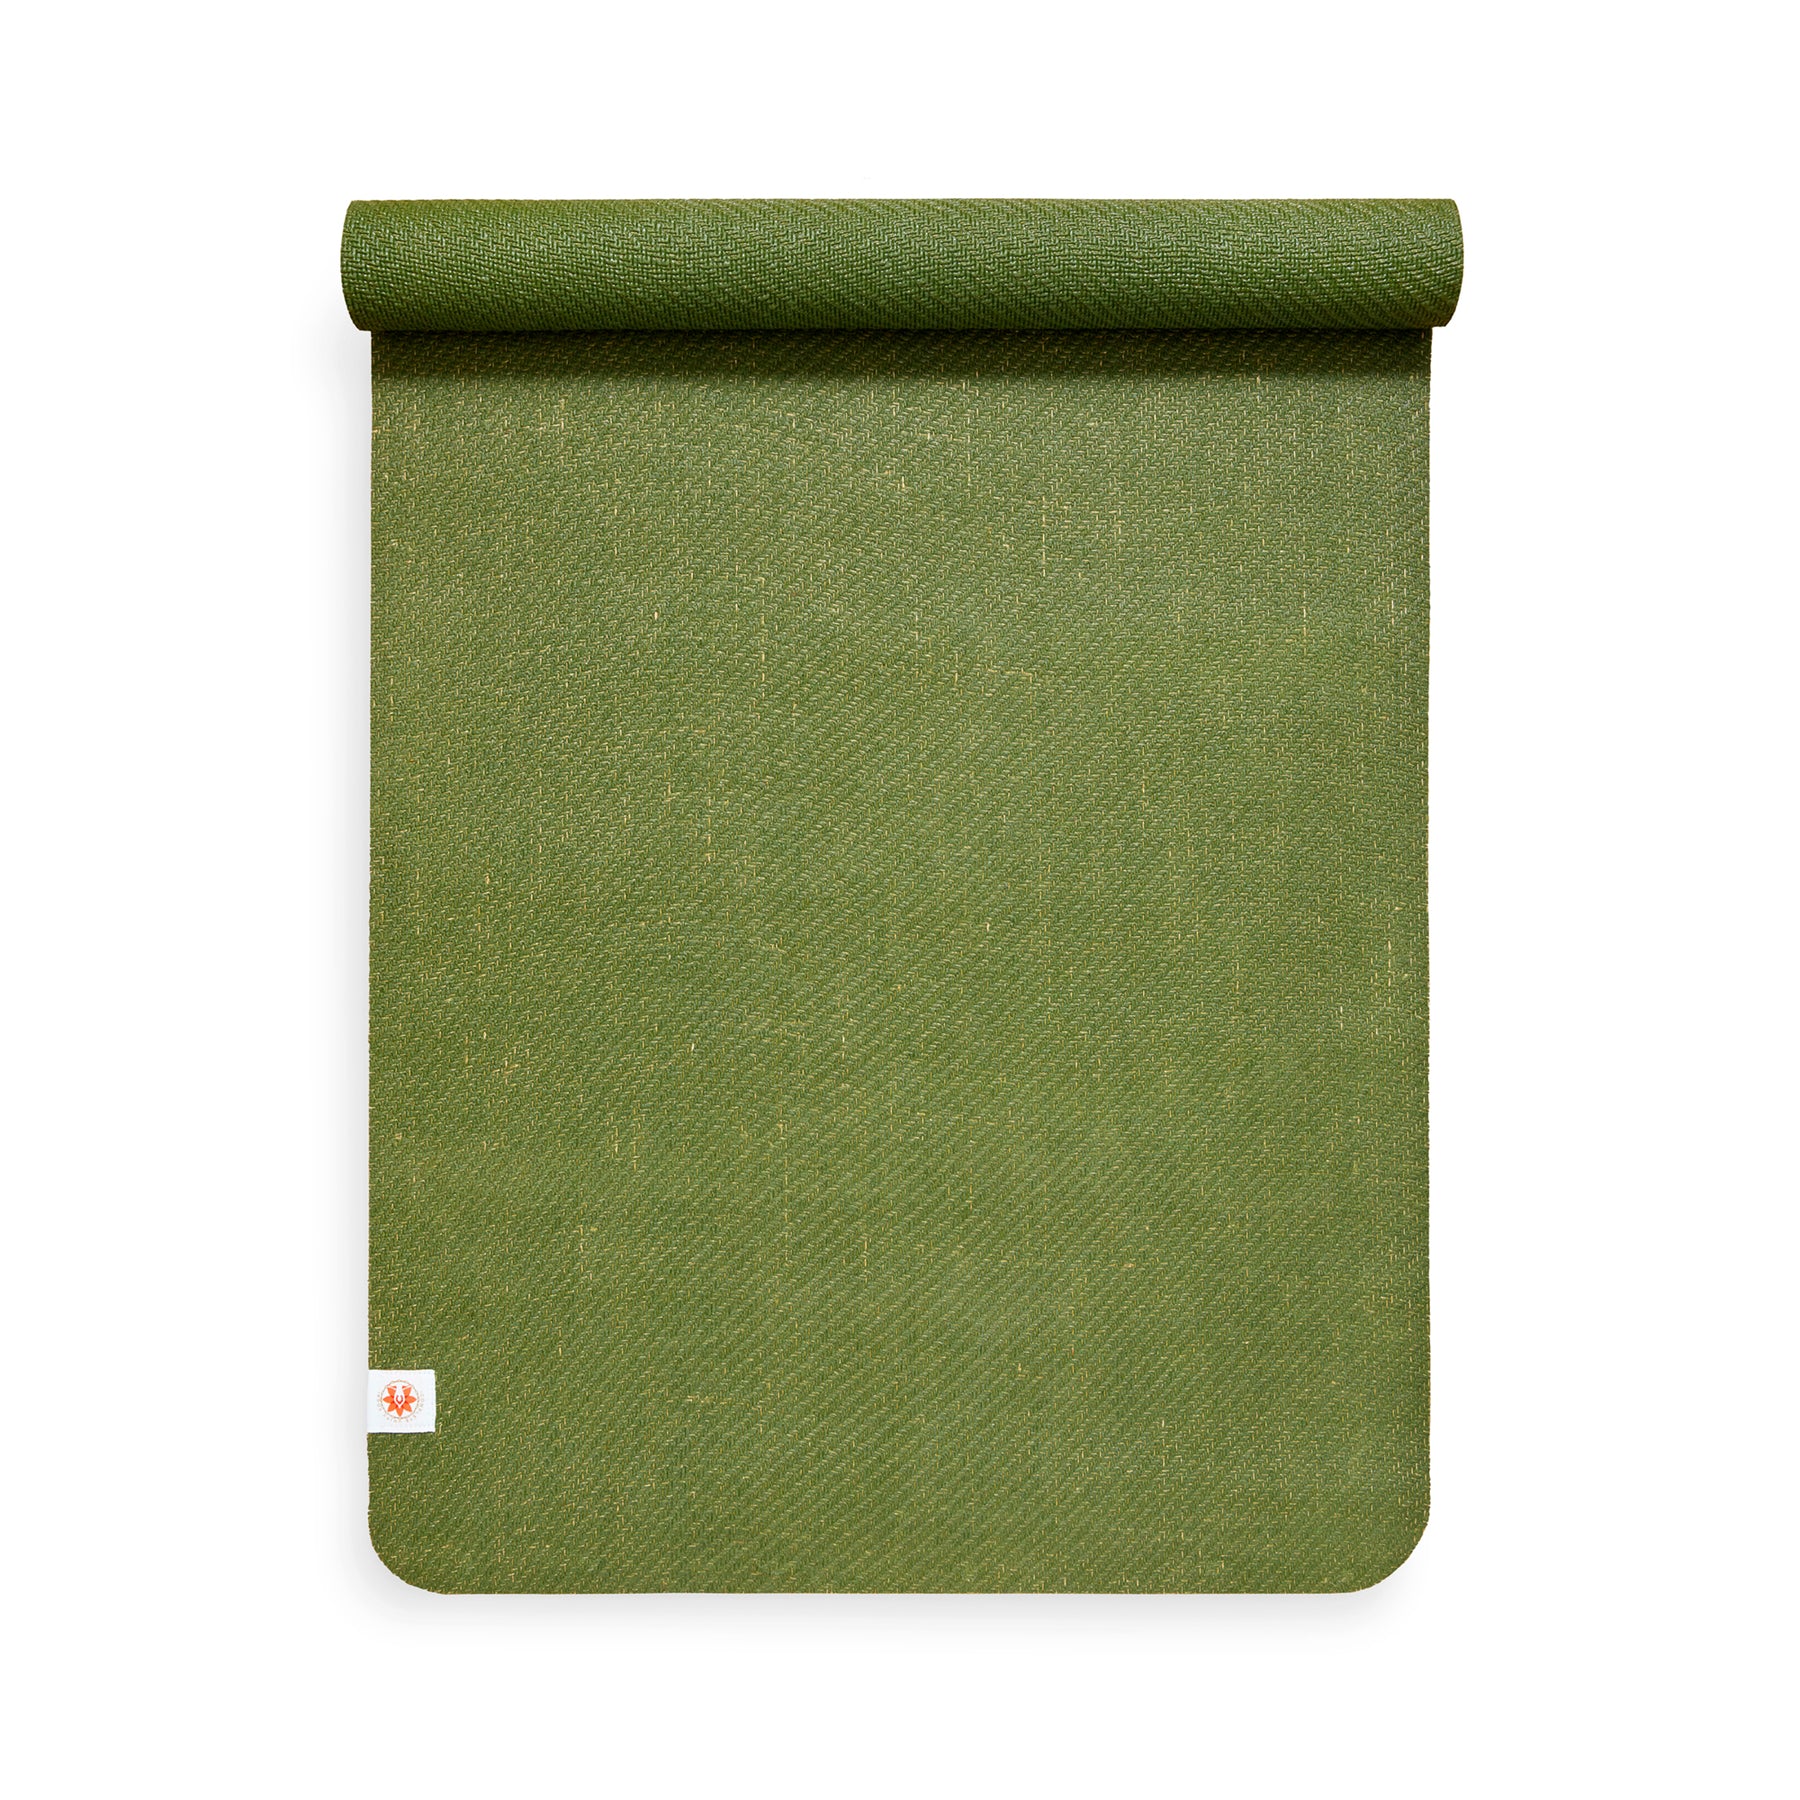 Foldable Yoga Mat, Buy Premium Yoga Mats